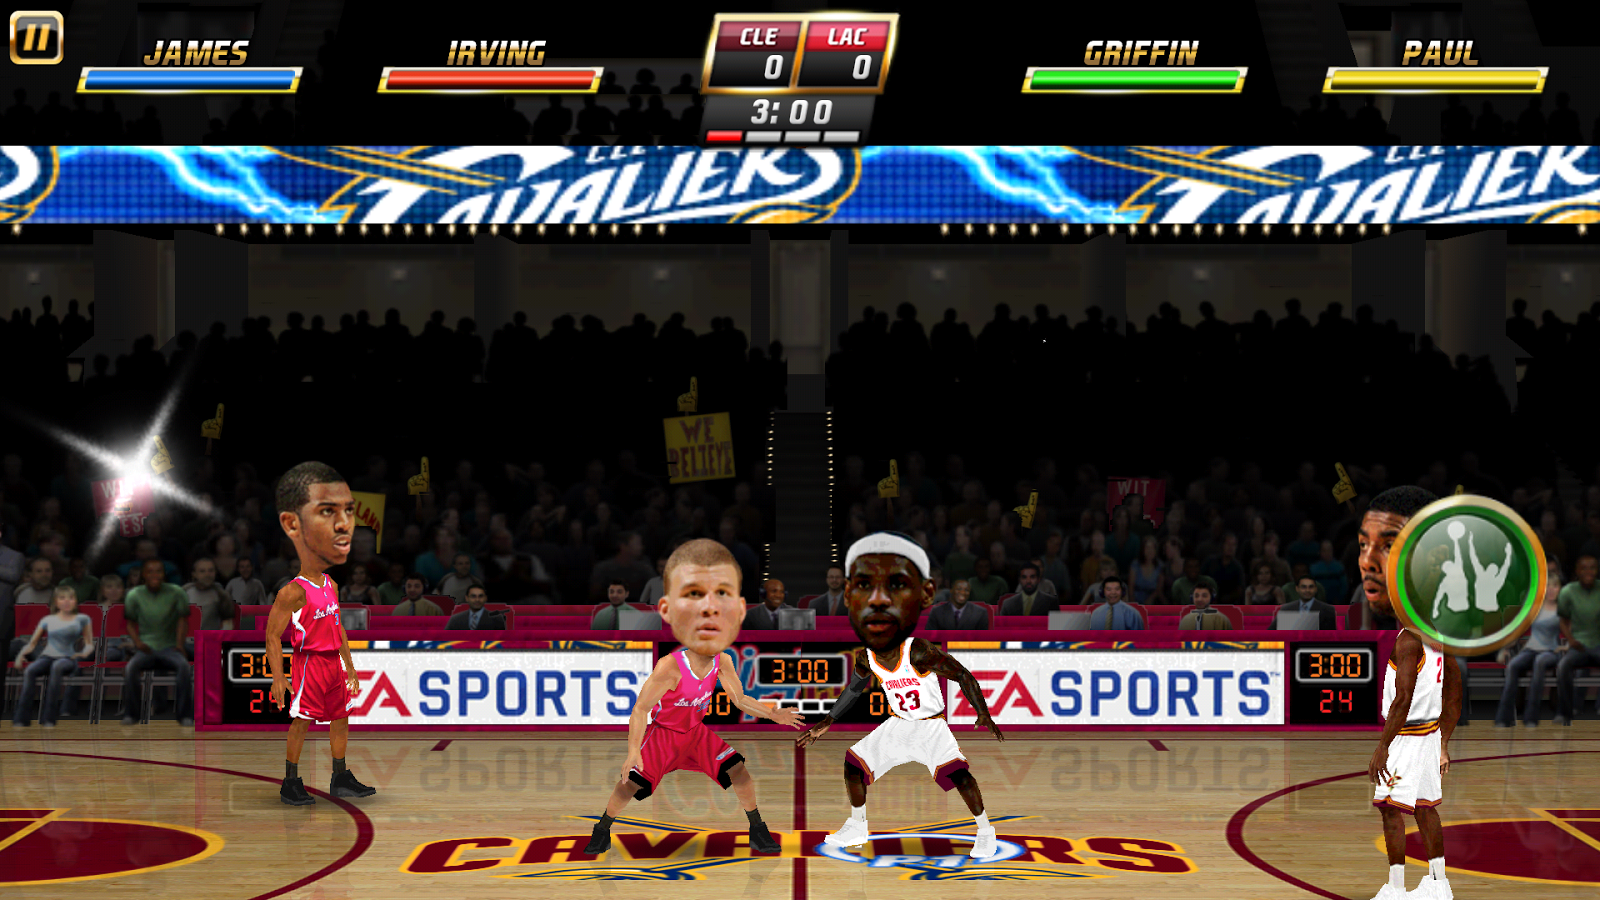    NBA JAM by EA SPORTS™- screenshot  